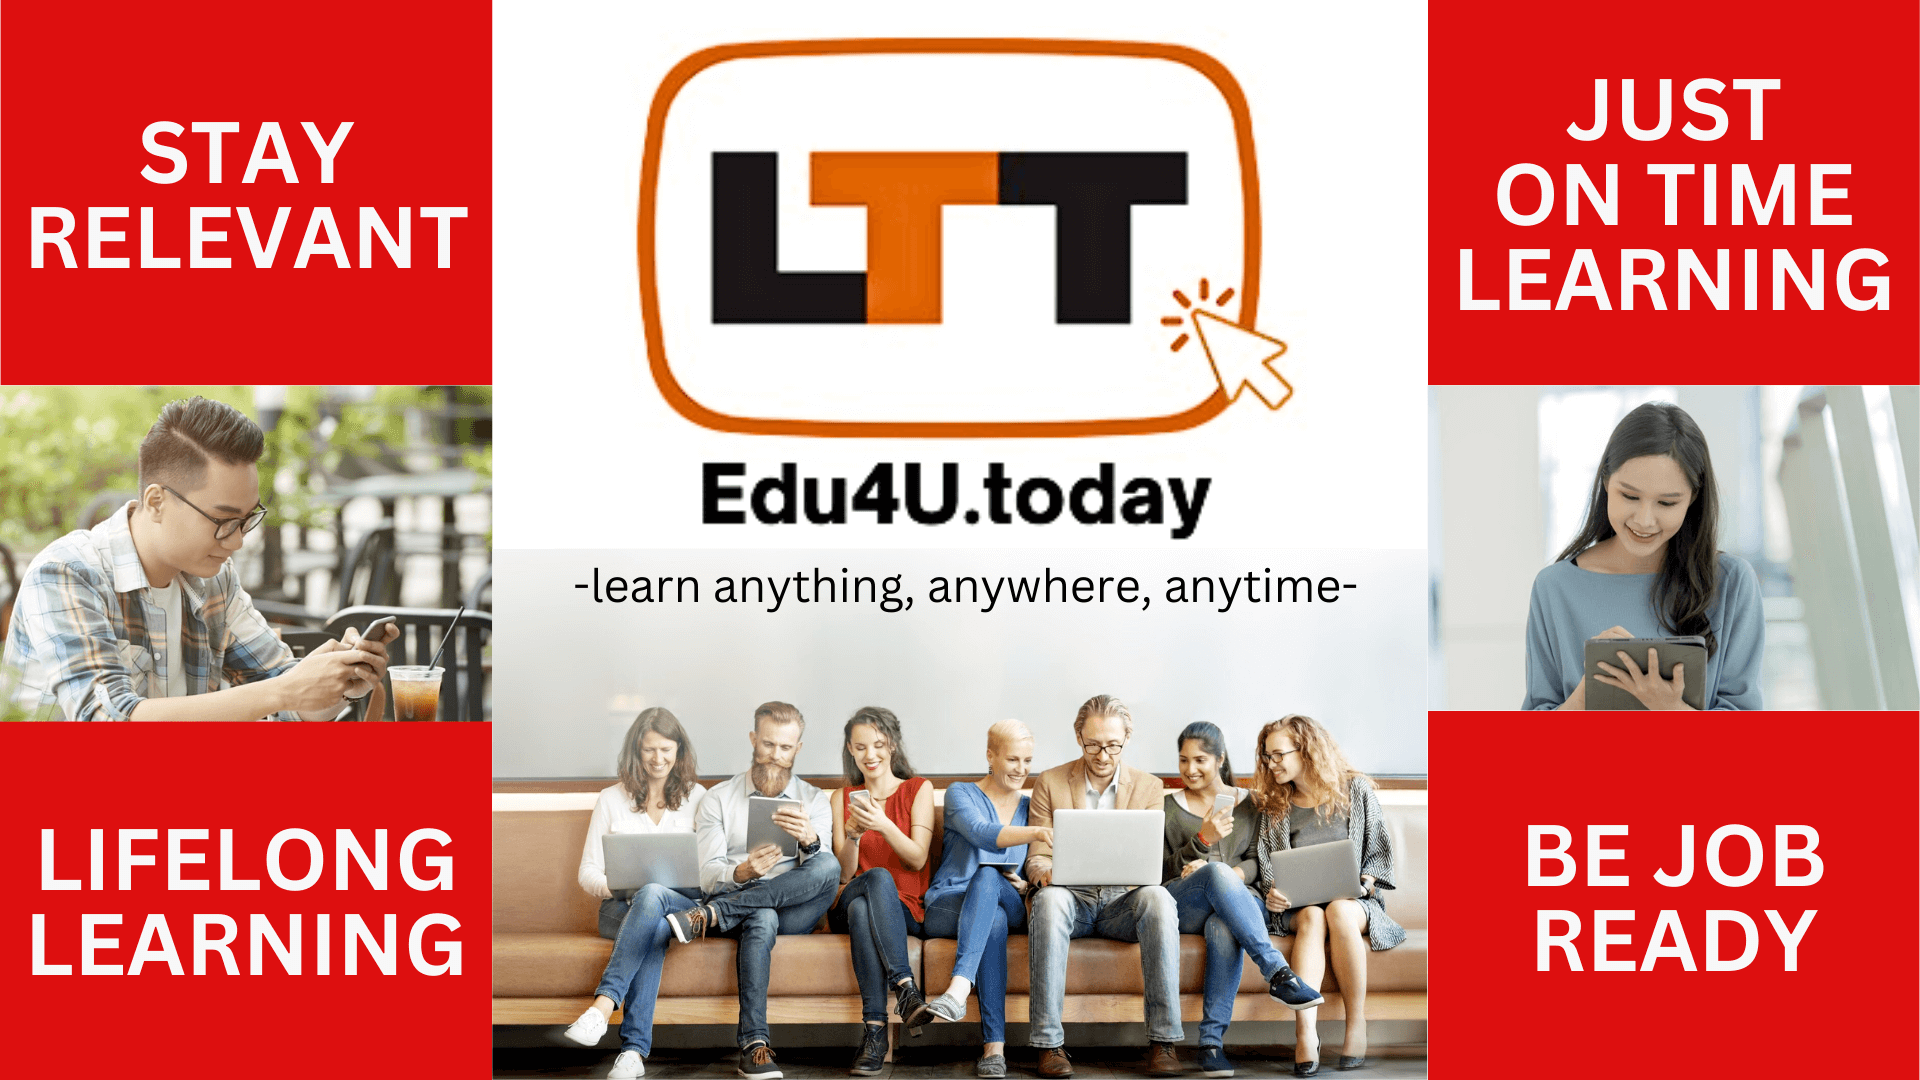 Uum Online Learning: Enhance Skills Anywhere, Anytime!